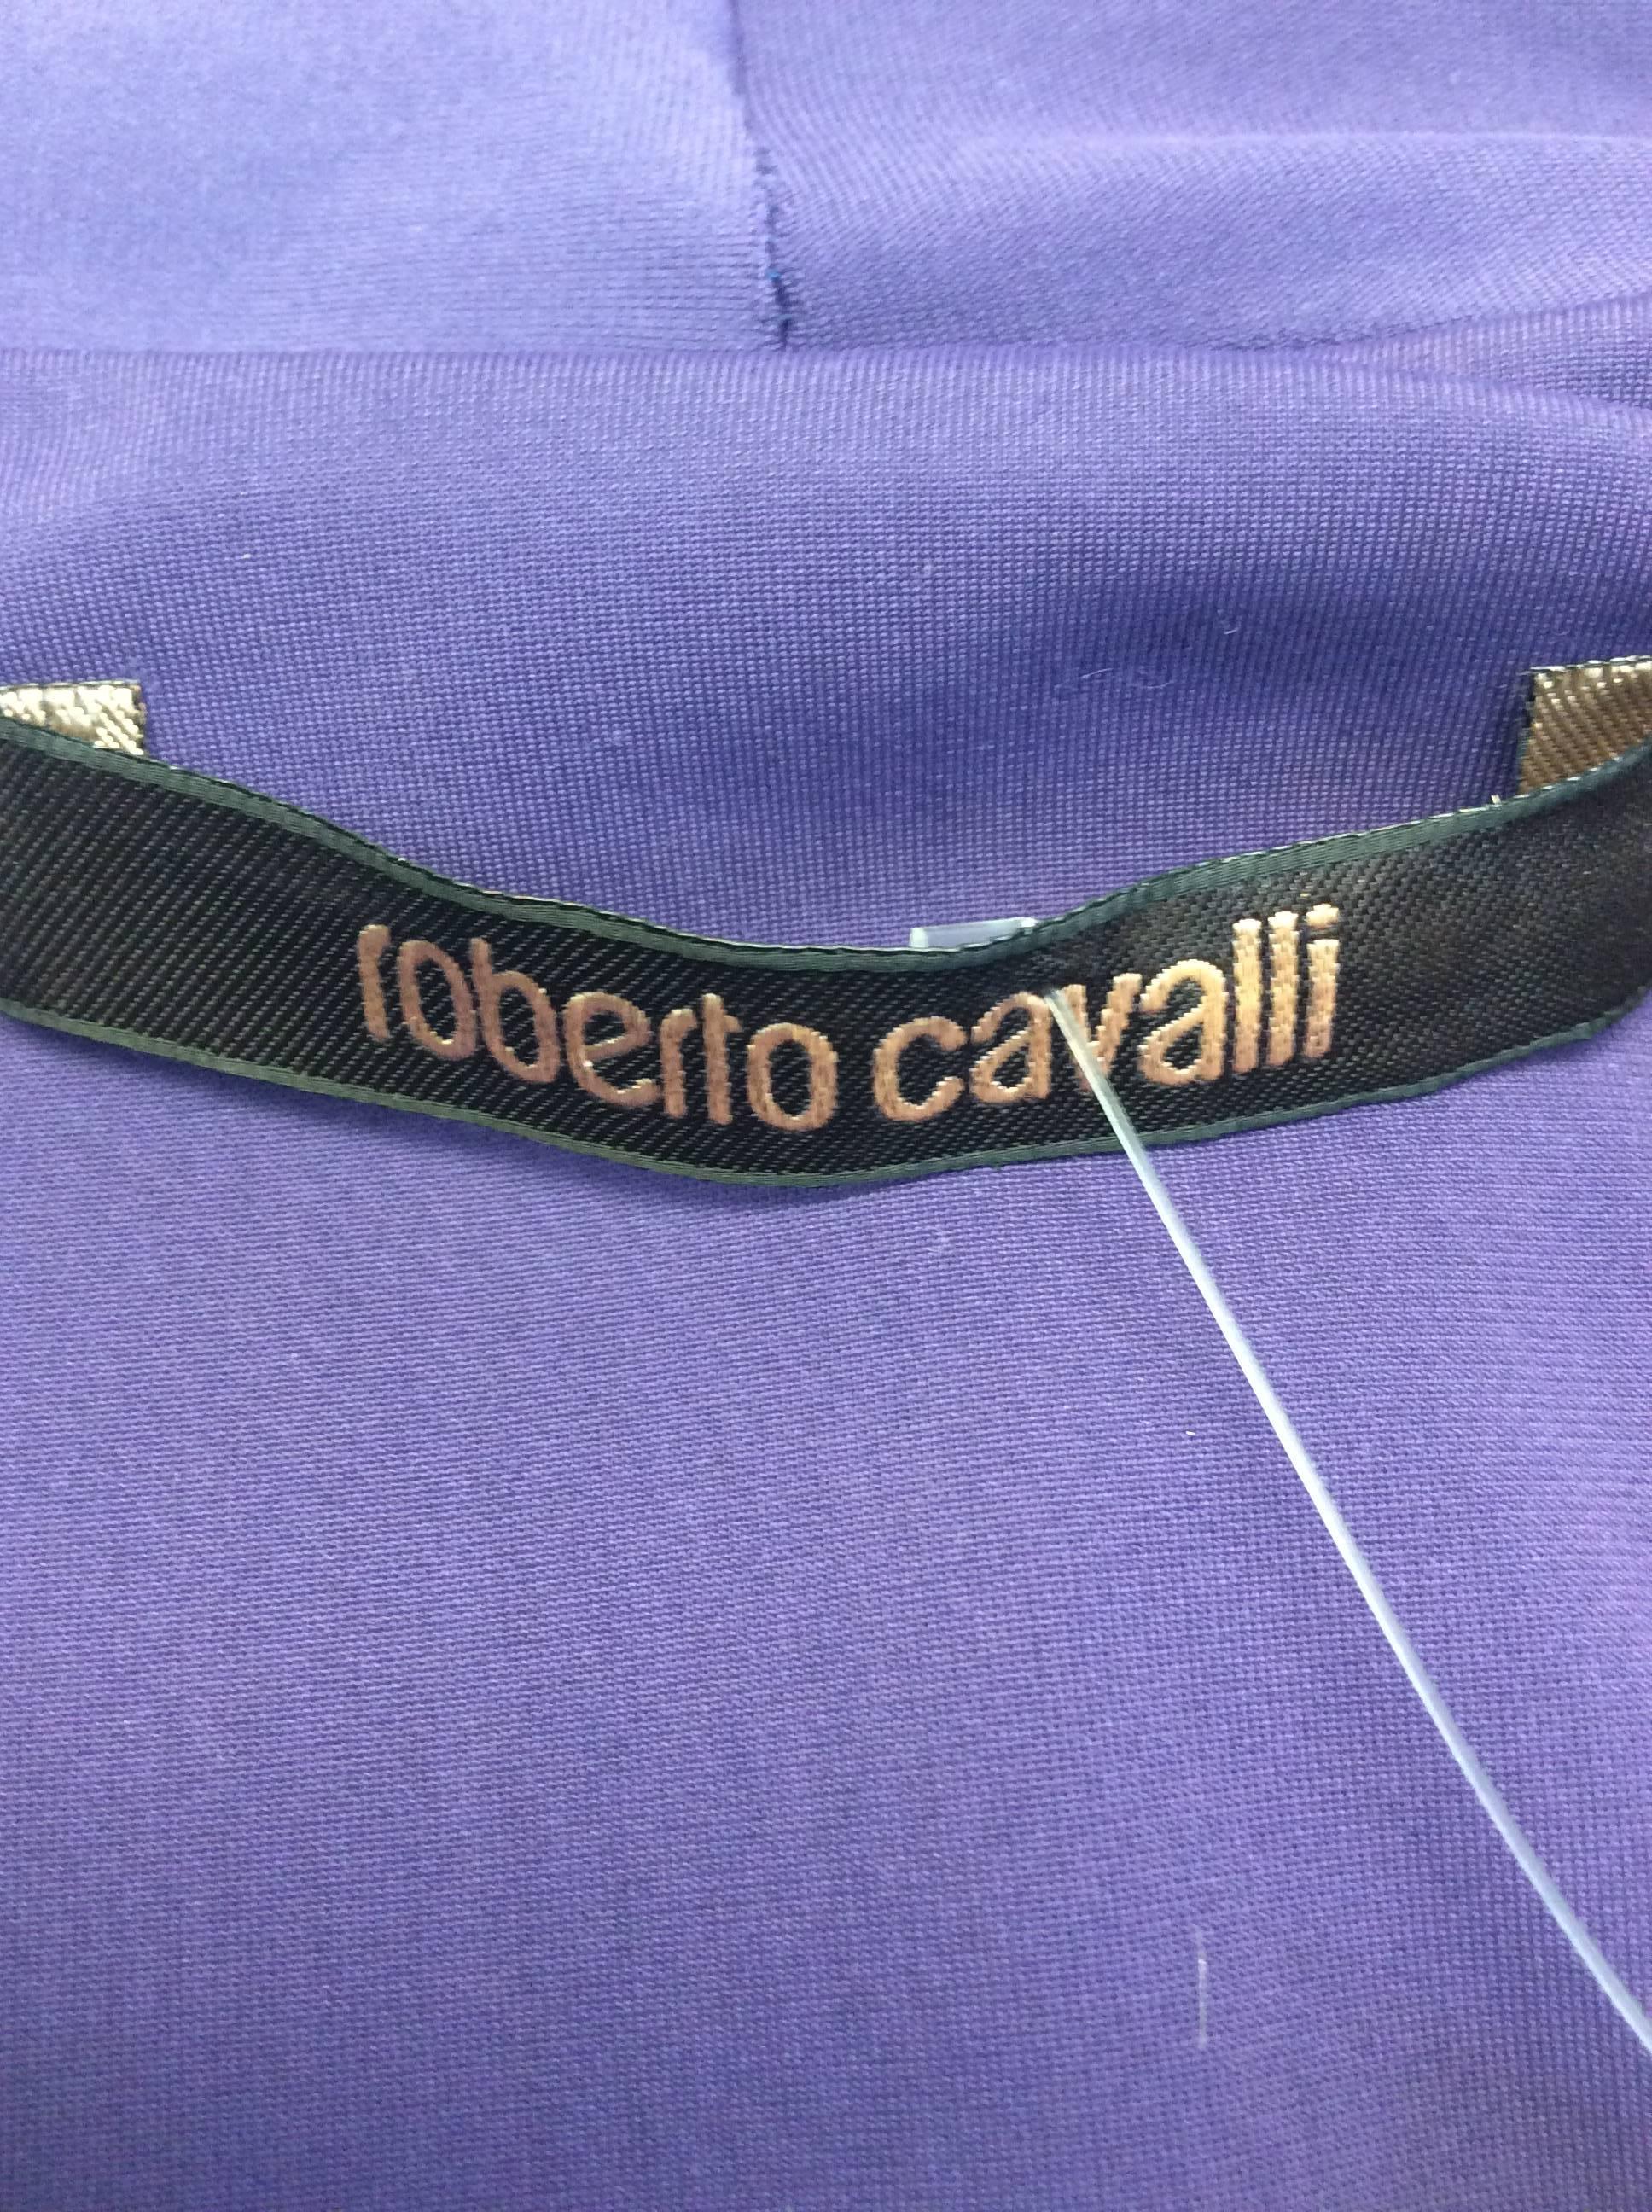 Roberto Cavalli Purple Print Dress For Sale 3